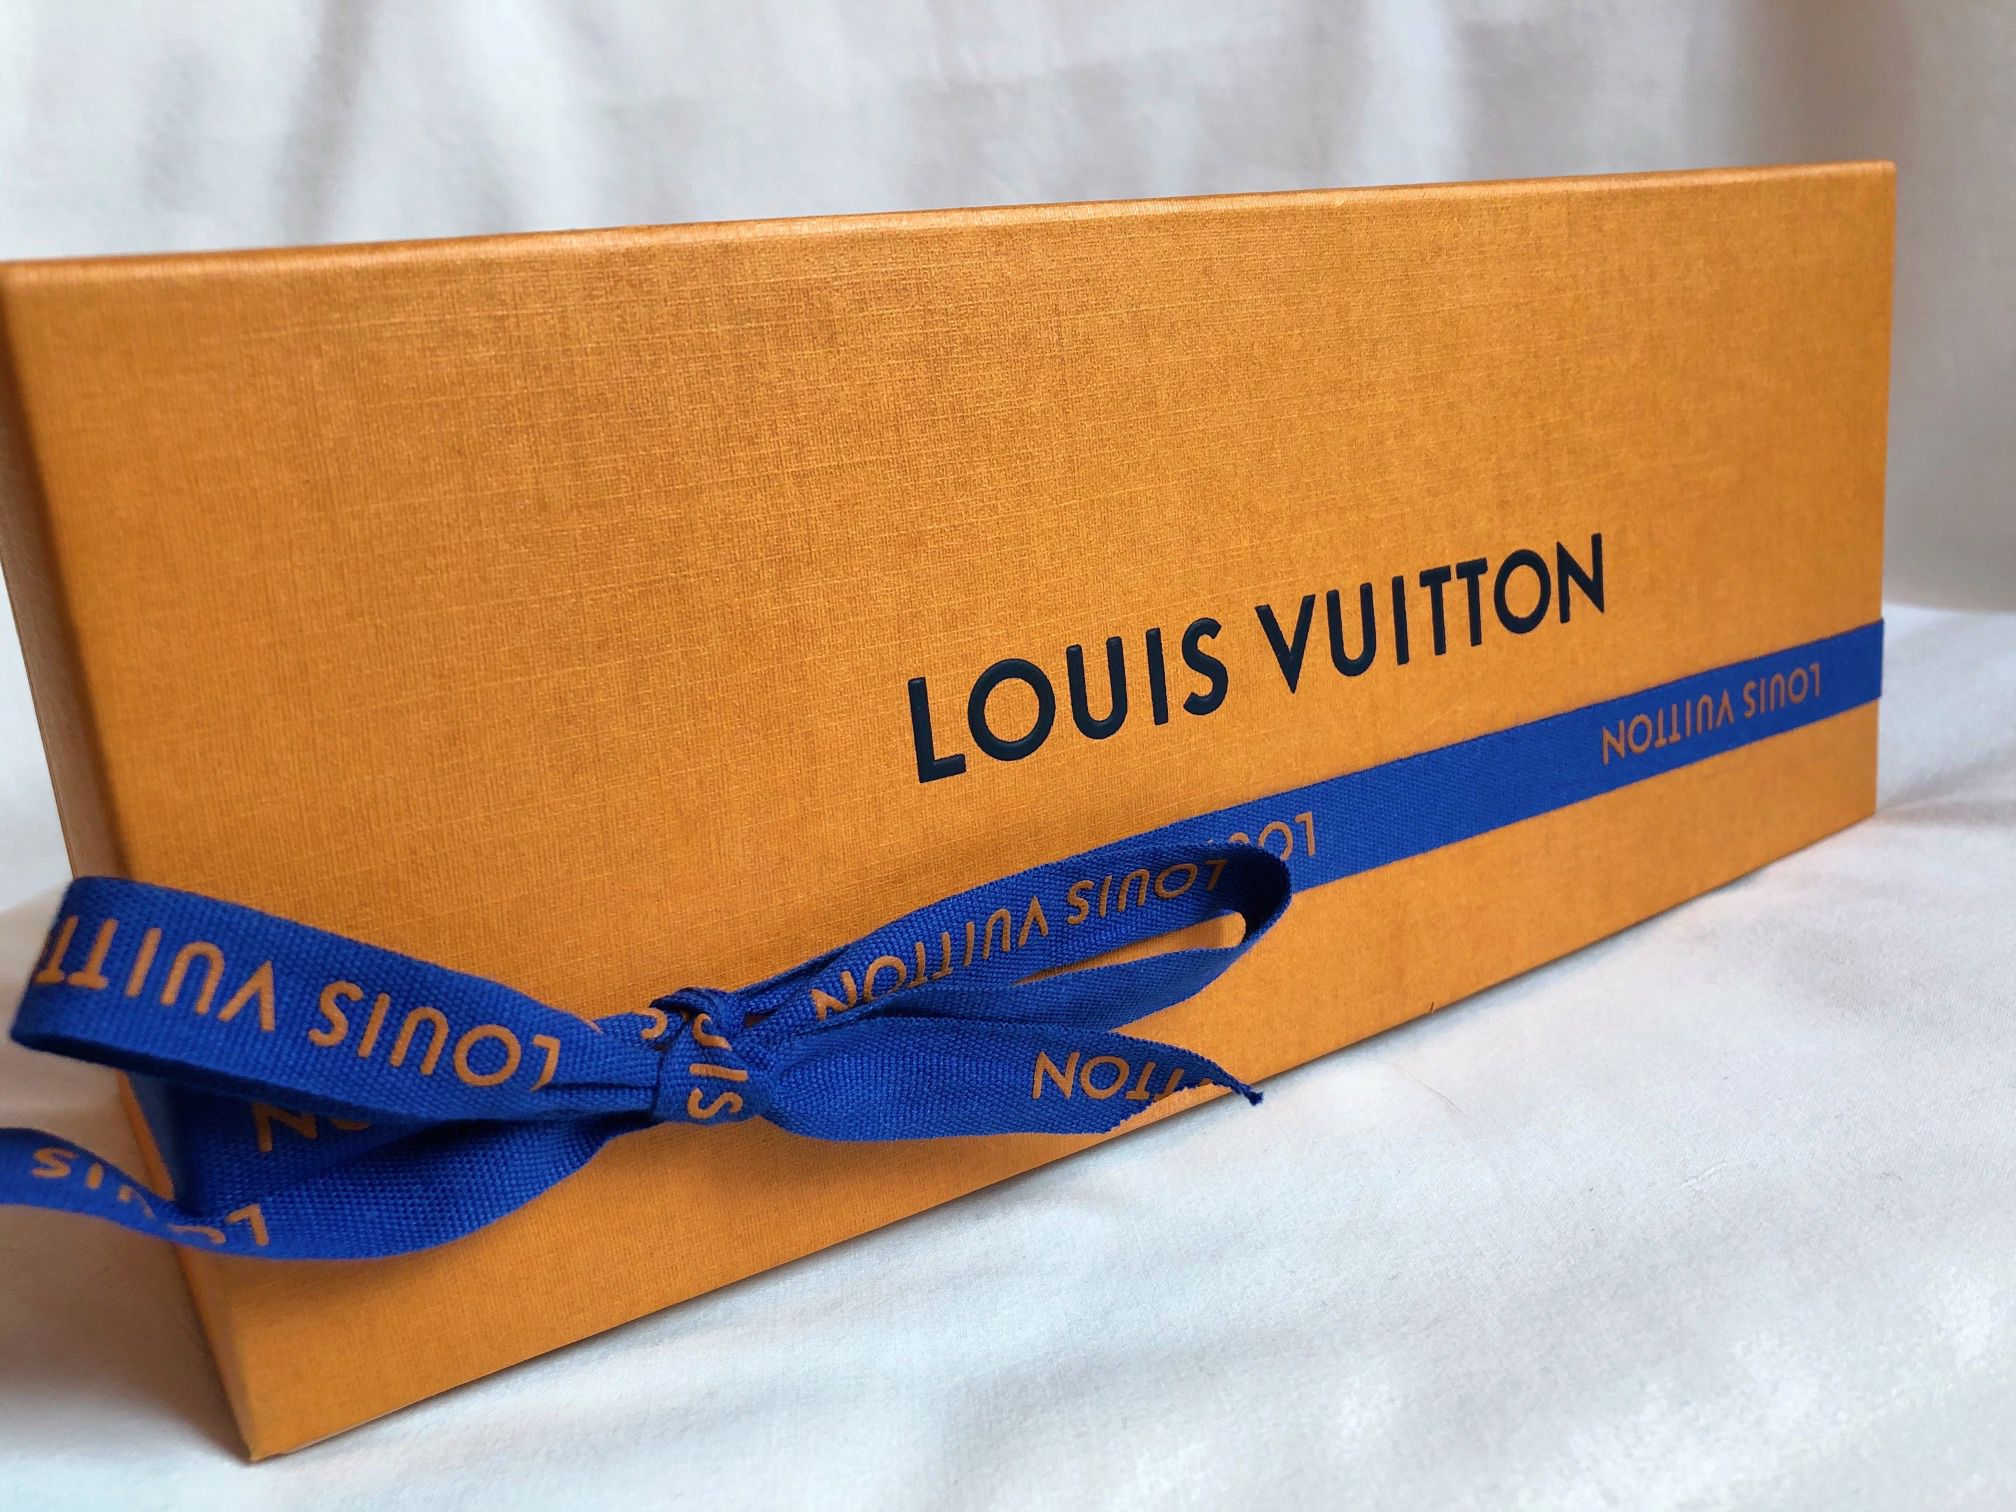 Louis Vuitton Women's Perfume for Sale in Thousand Oaks, CA - OfferUp